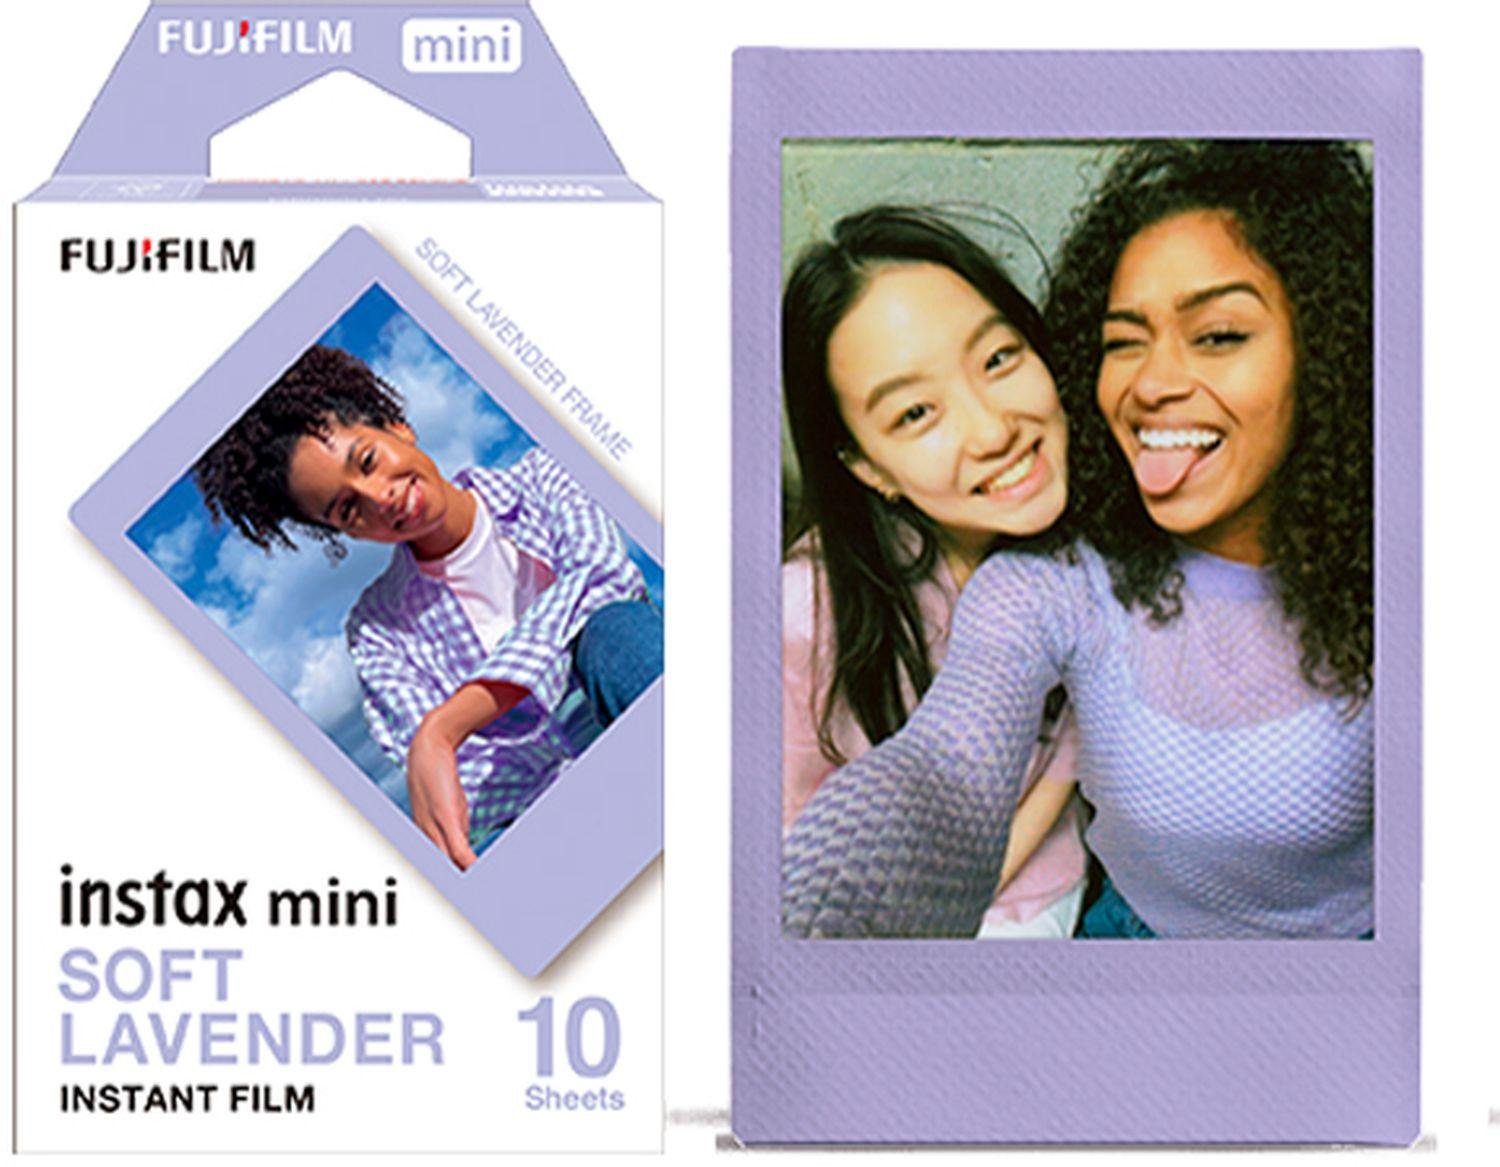 FUJIFILM Fujifilm Sofortbildkamera Mini Lavender Film Soft Instax